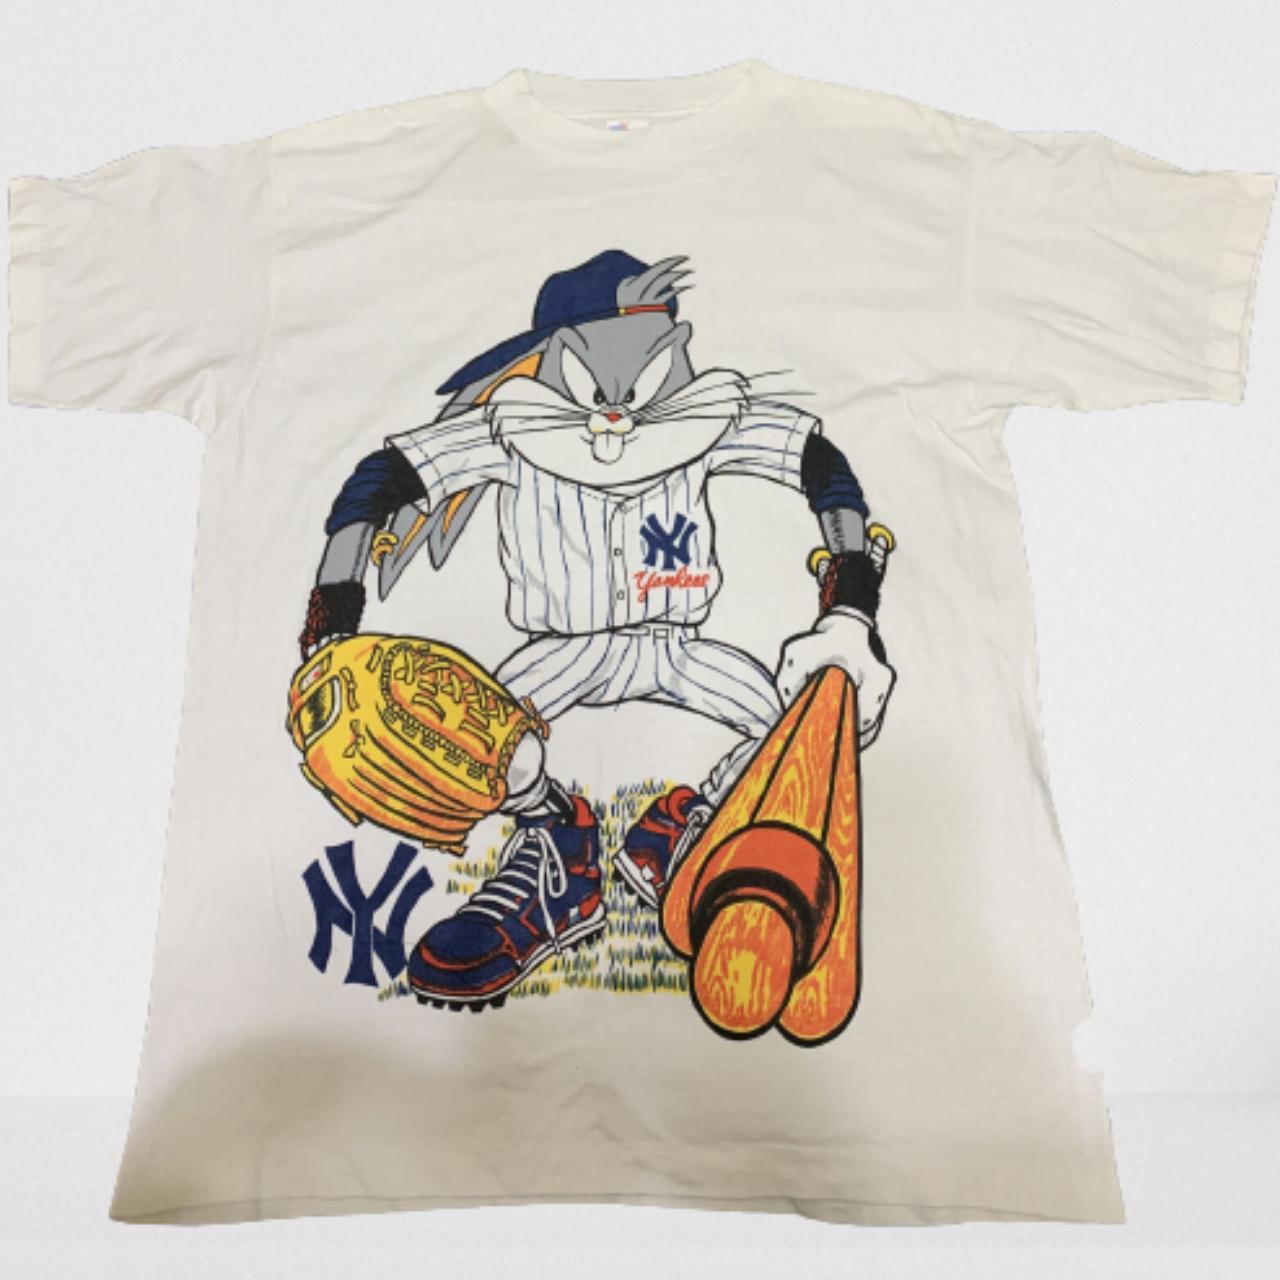 Gildan New York Yankees MLB Shirts for sale